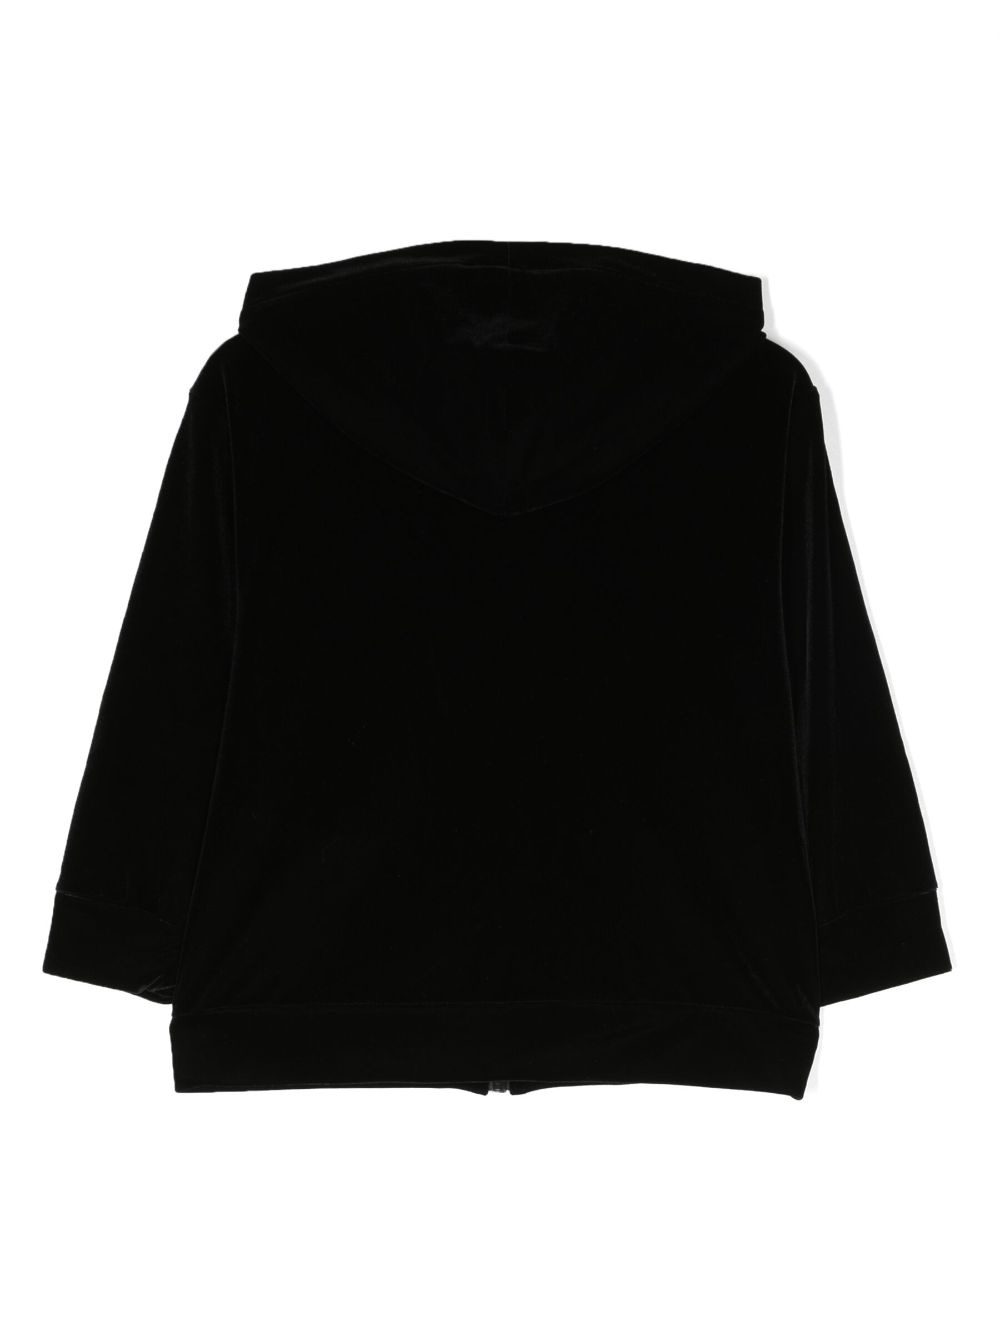 Black sweatshirt for girls with logo